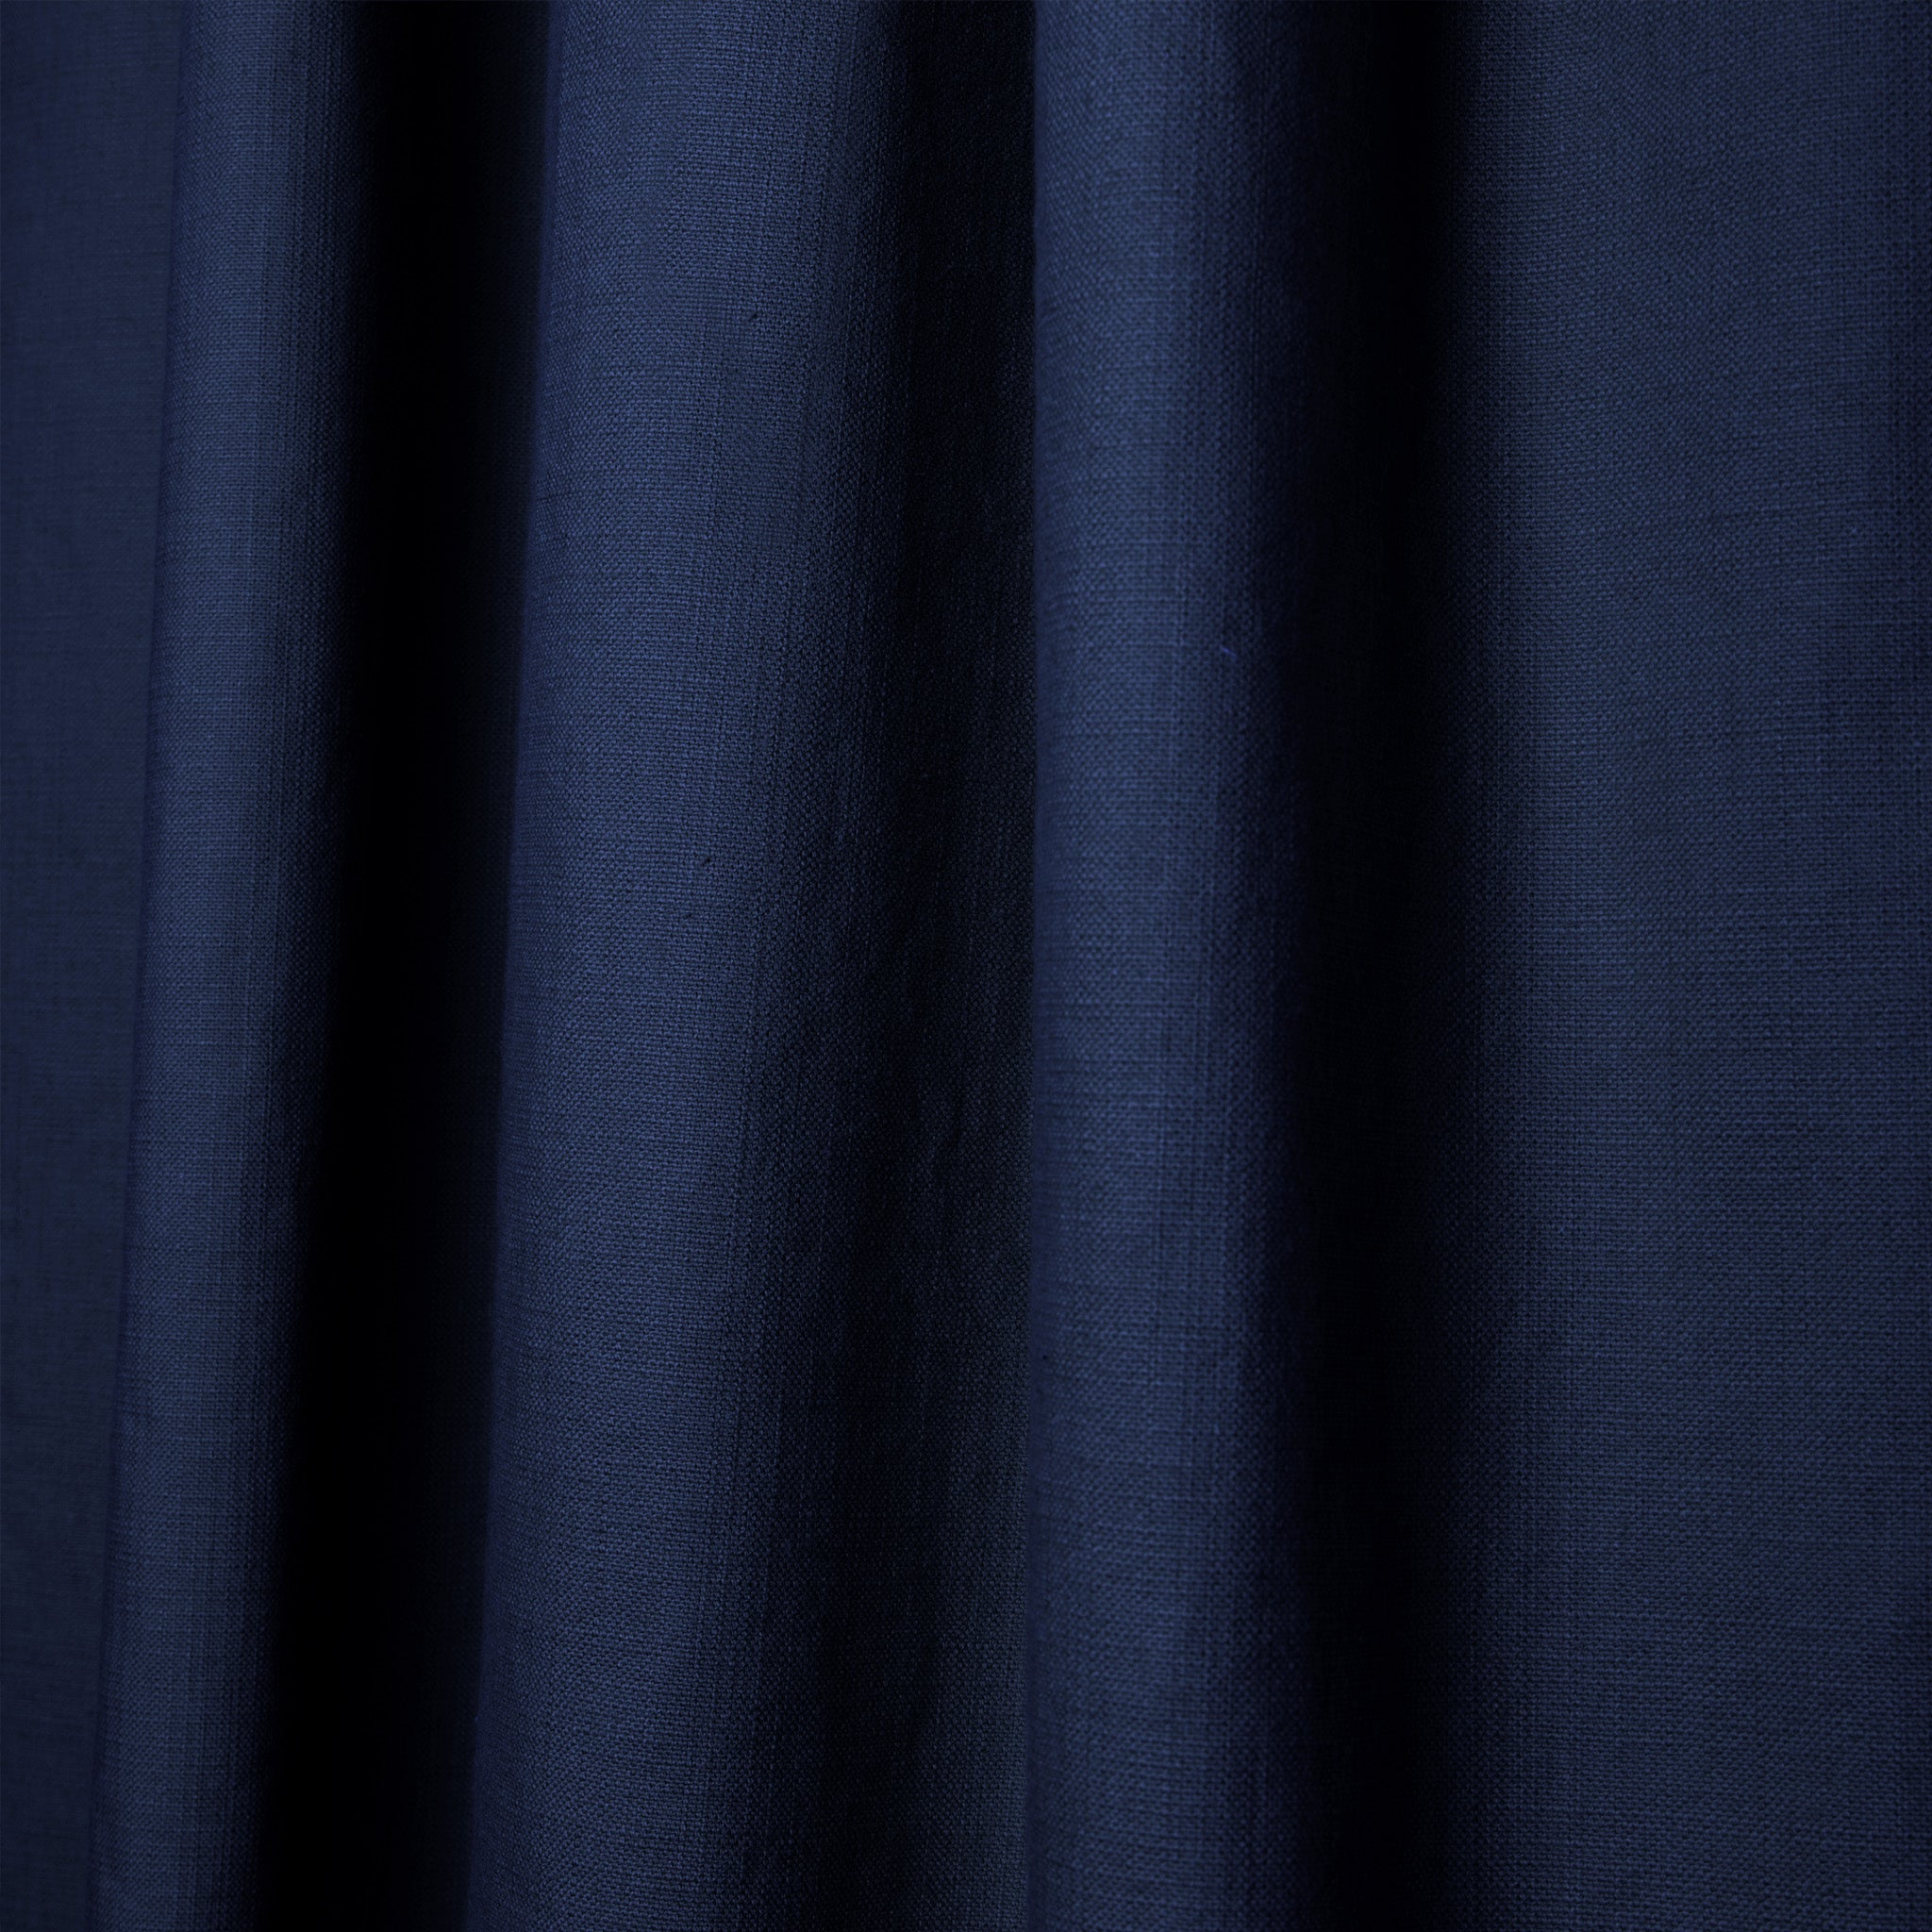 Midnight Curtain - Grommet, 50"W x 100"L, Privacy Lining, Cherry Rick Rack Trim